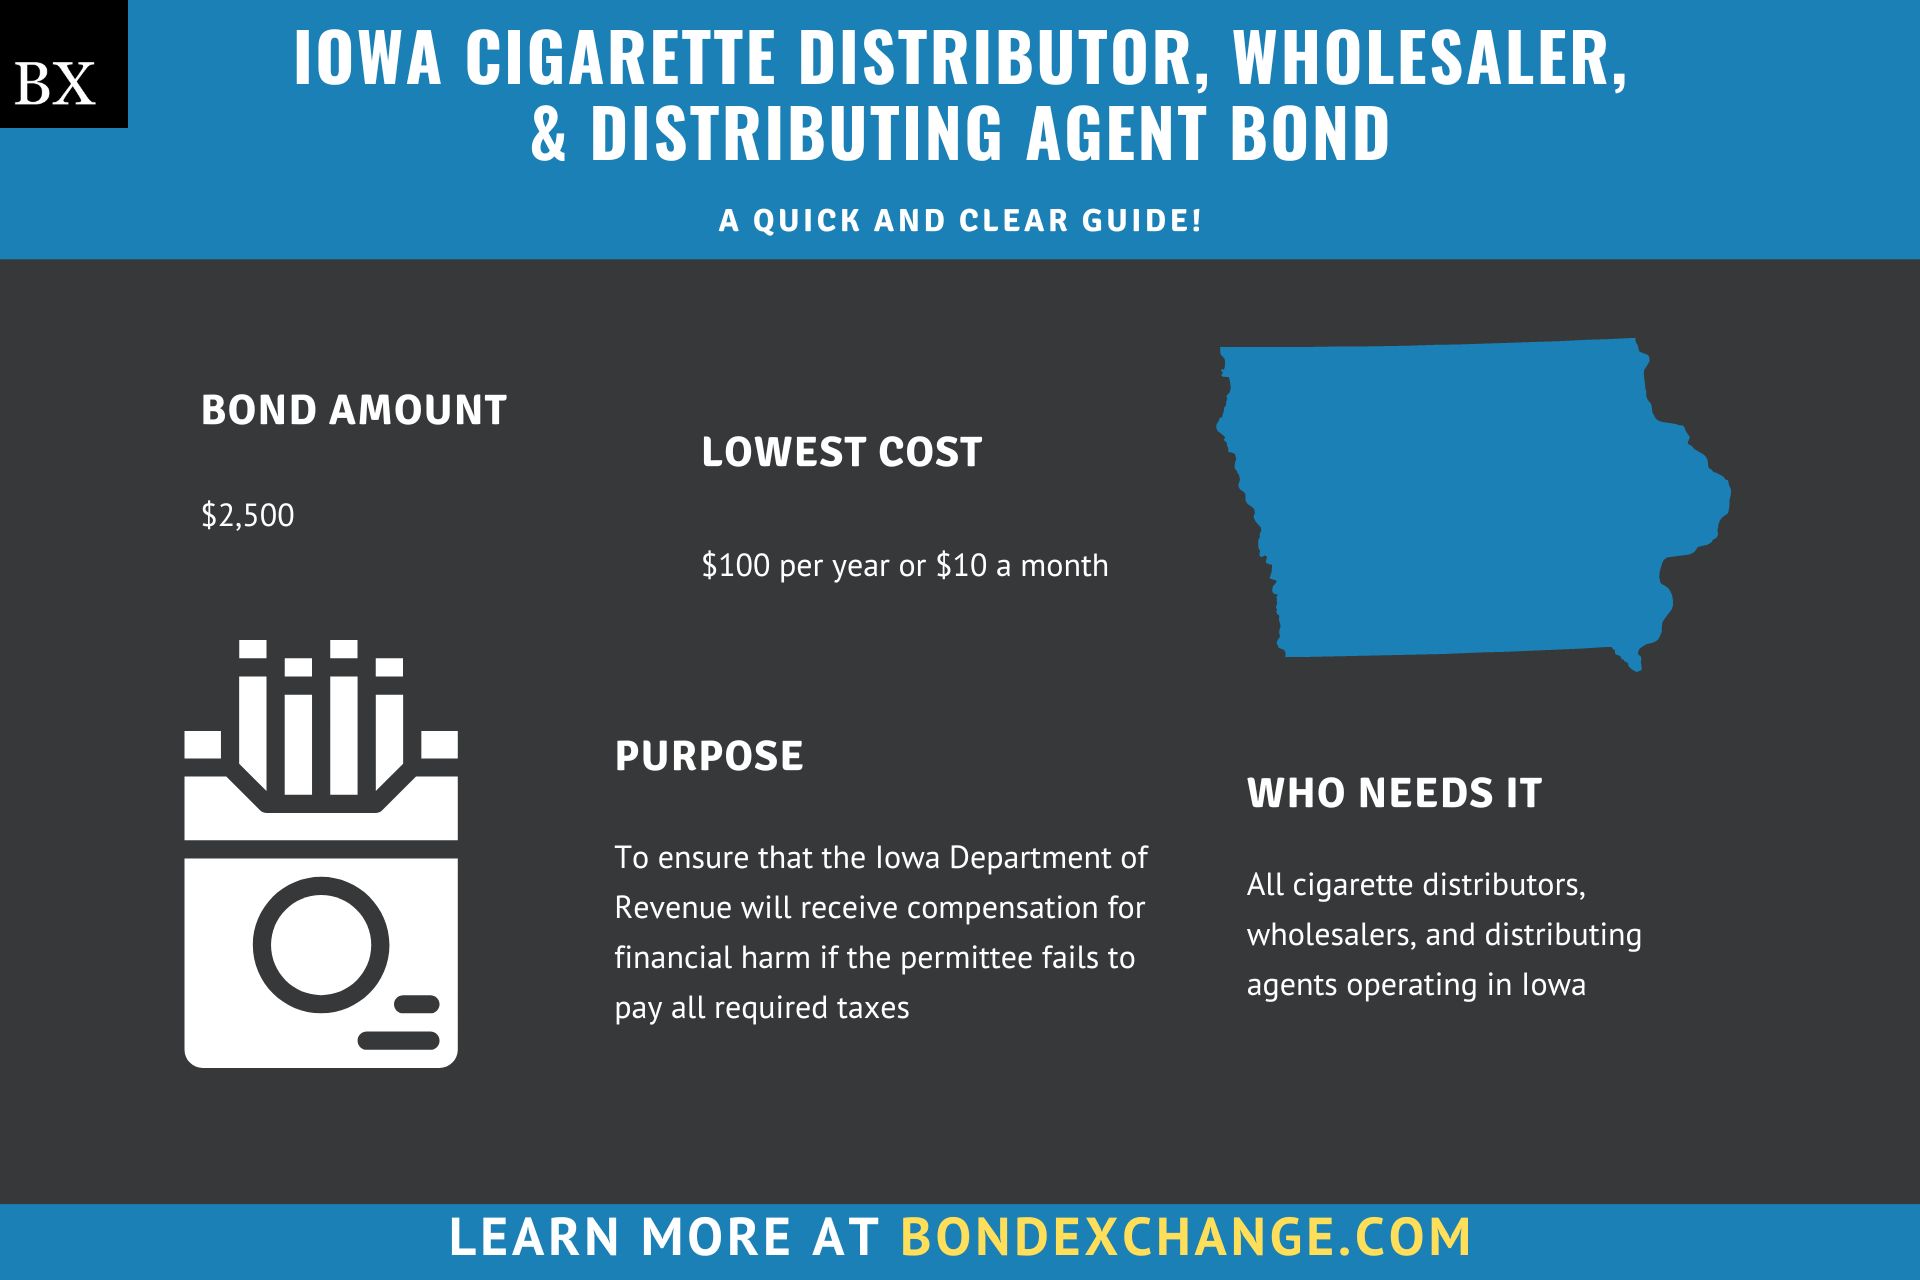 Iowa Cigarette Distributor, Wholesaler, and Distributing Agent Bond